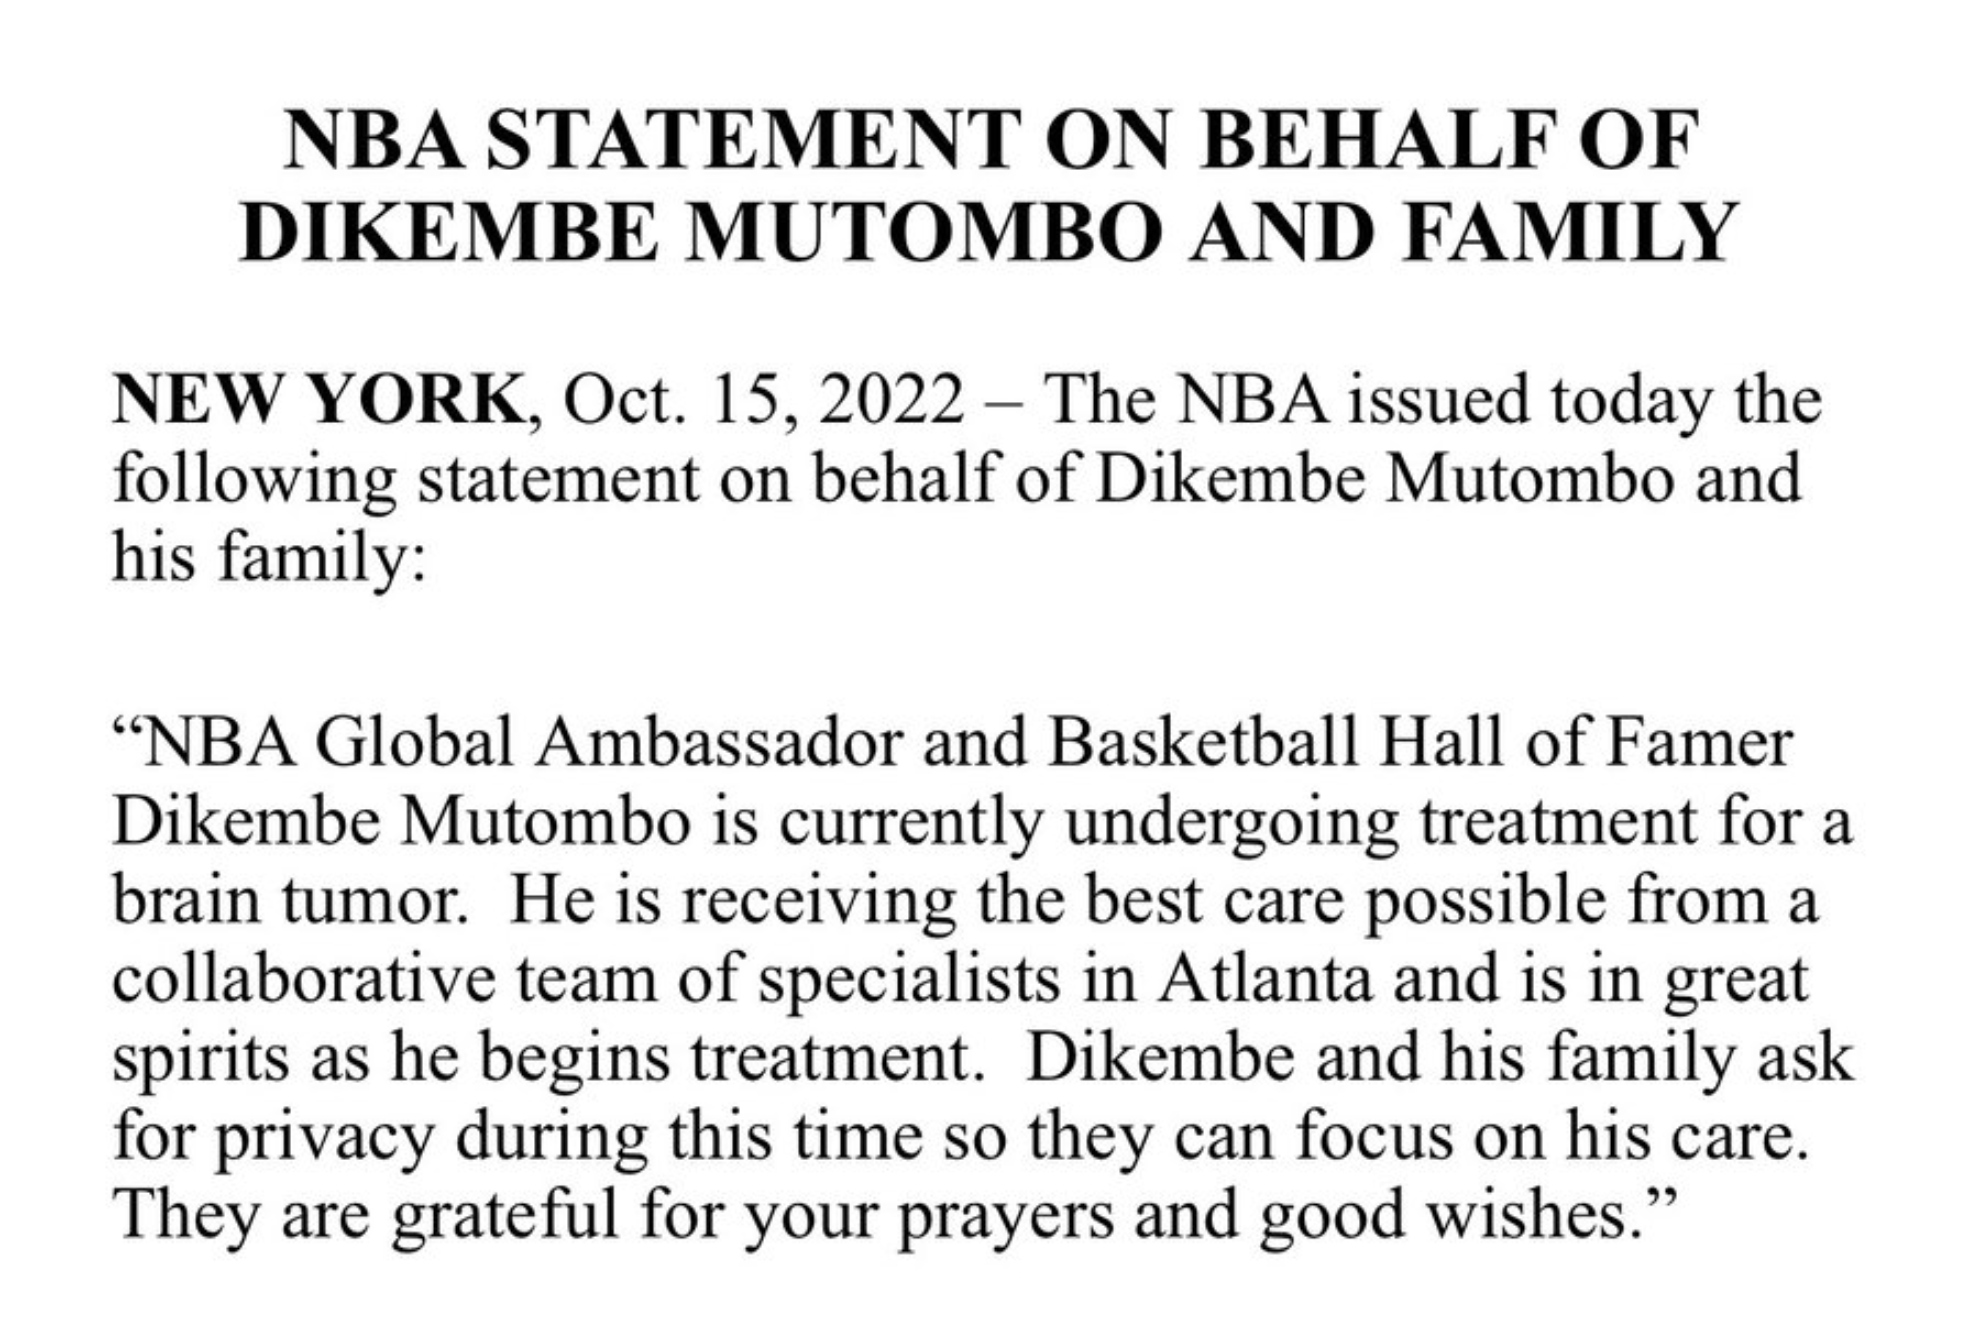 La NBA informa que la leyenda Dikembe Mutombo padece un tumor cerebral